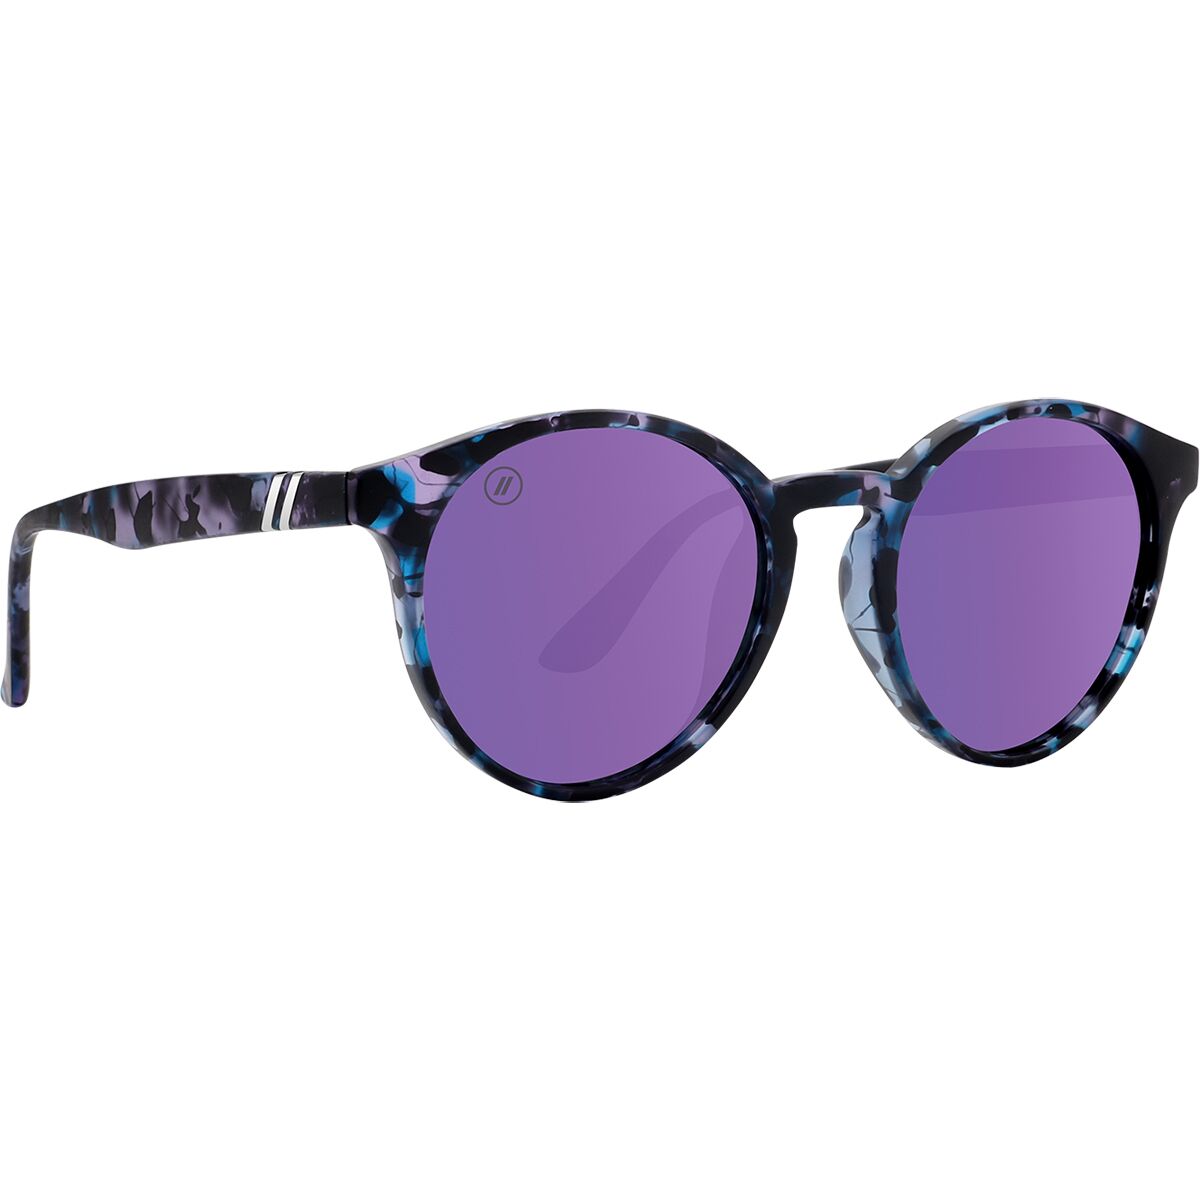 Blenders Eyewear Rolling Brook Coastal Polarized Sunglasses - Women's